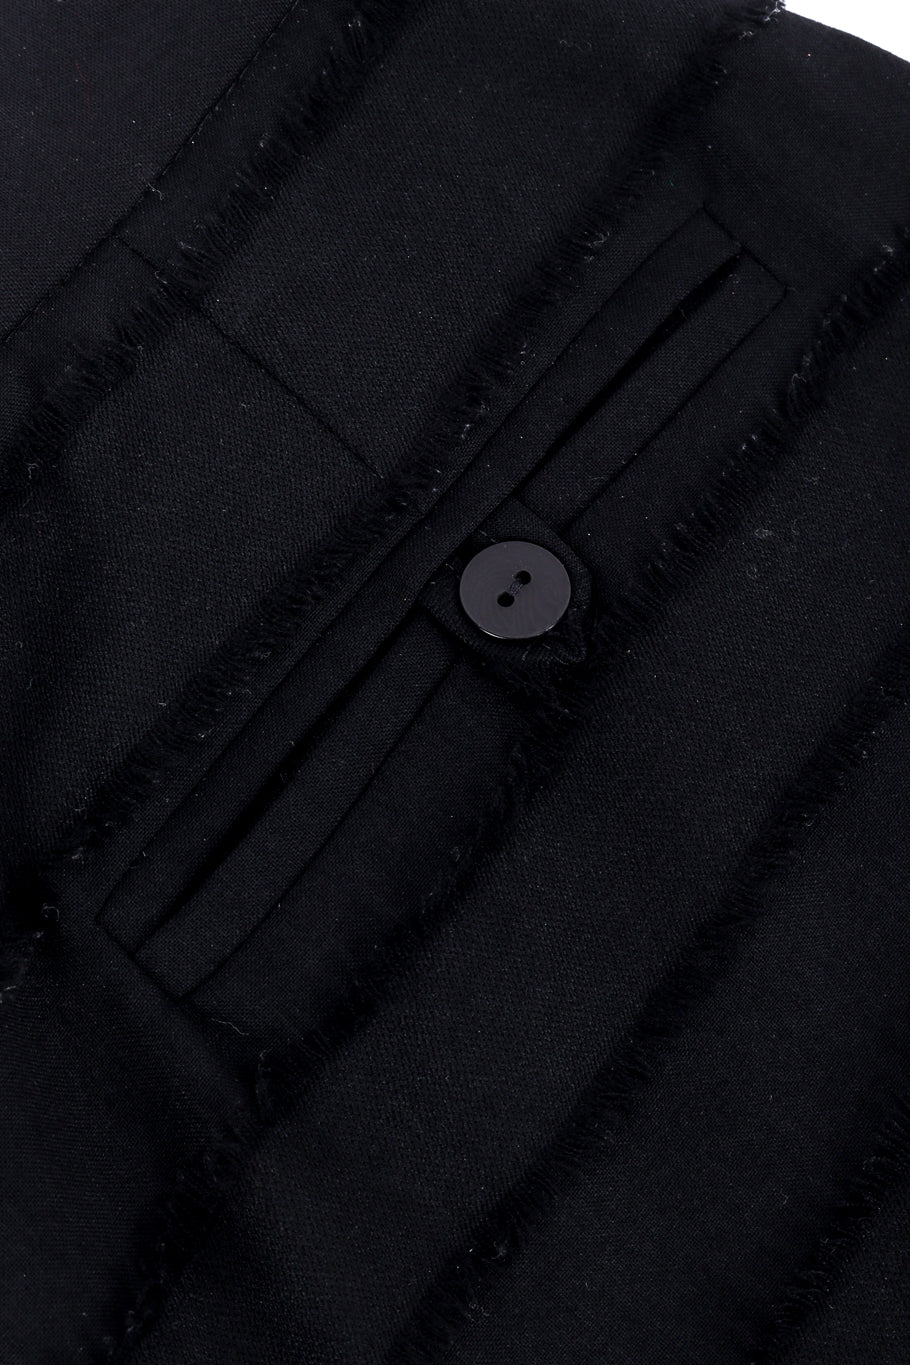 Vintage John Galliano Raw Edge Stripe Pant back button pocket @reces la